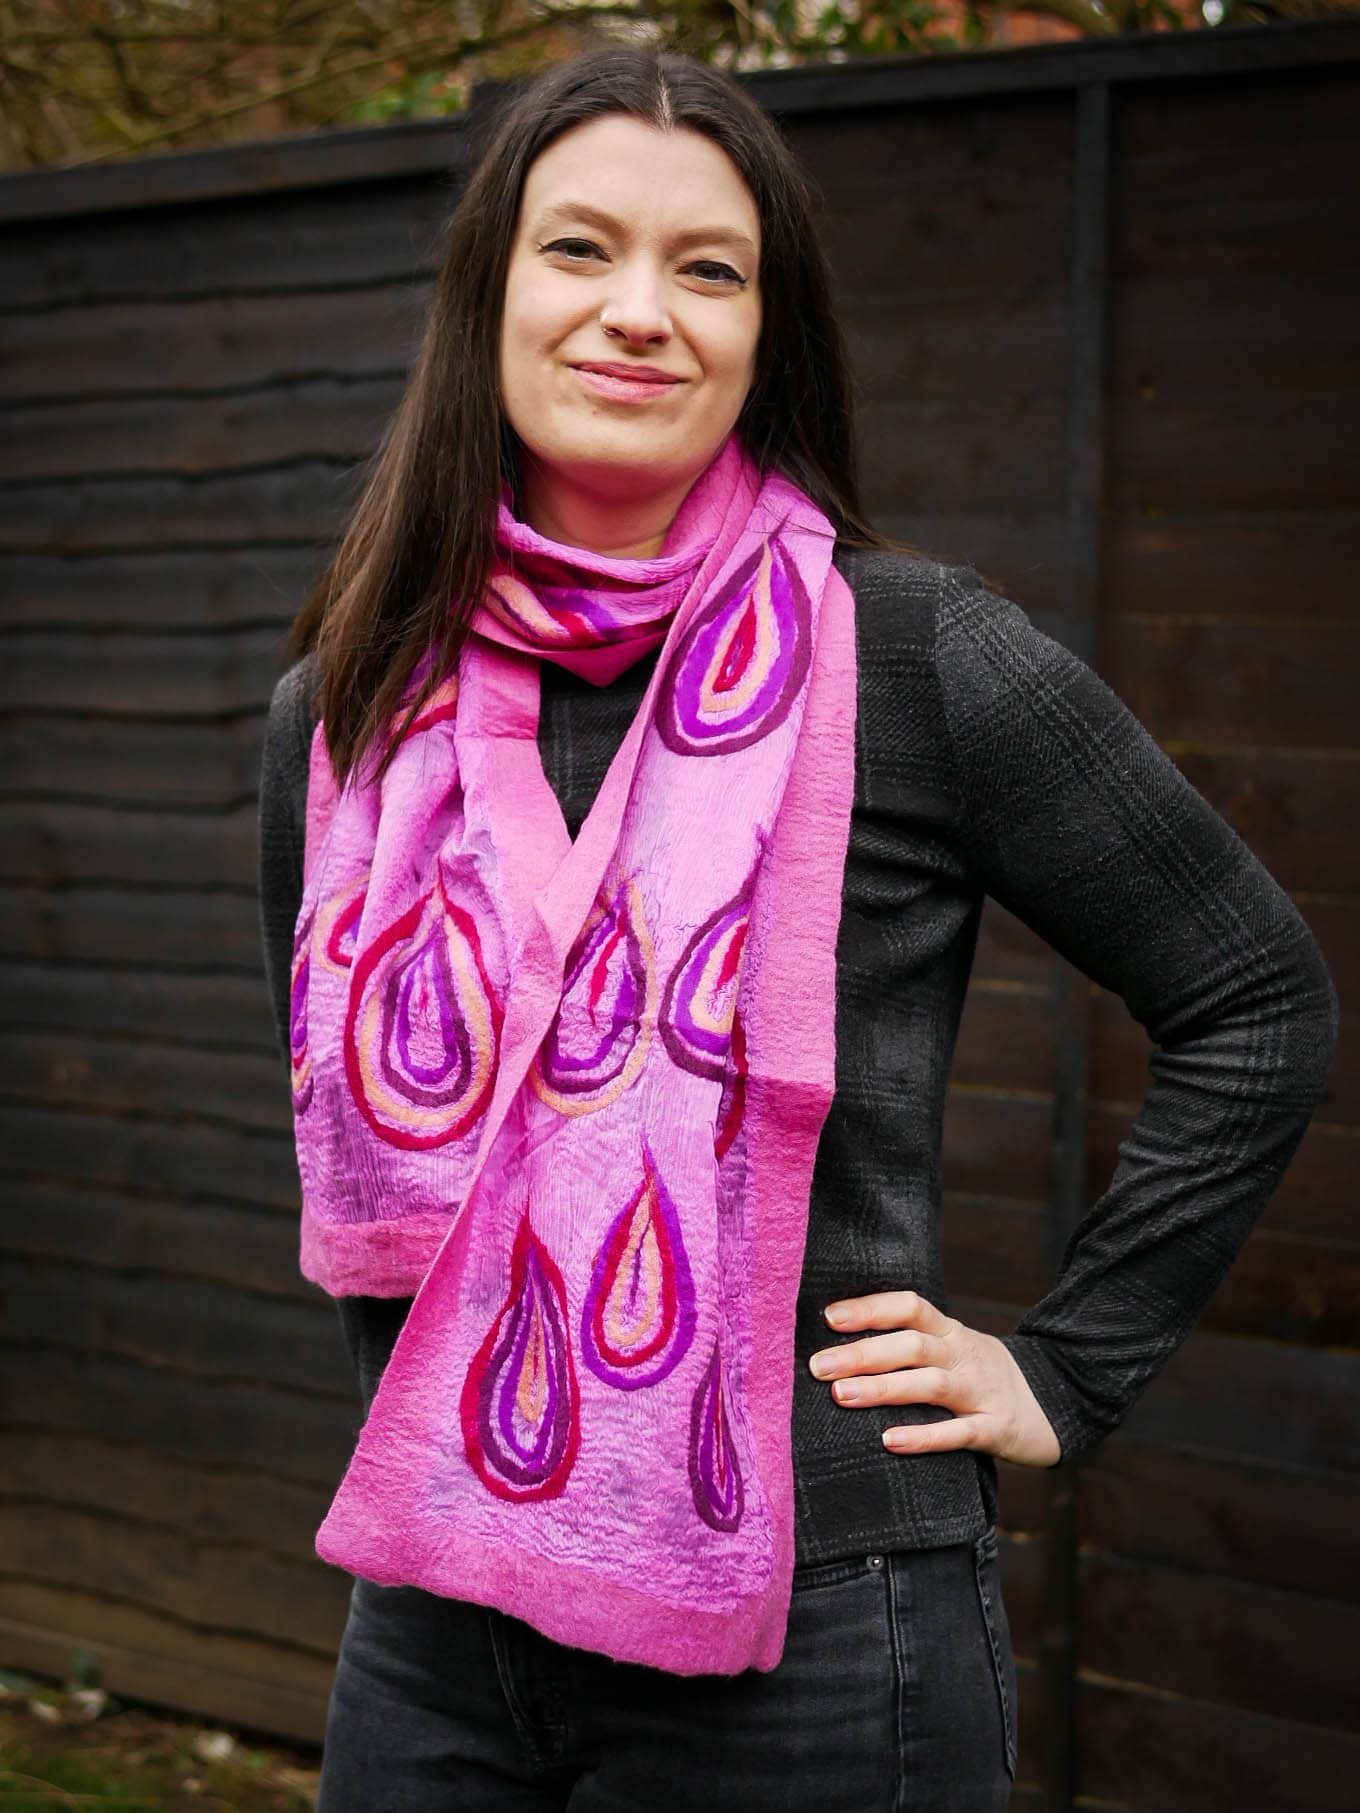 https://karmagear.co.uk/wp-content/uploads/2014/06/Karma-Gear-Special-Merino-Wool-Silk-Scarf-Handmade-Fair-Trade-Peacock-Pink.jpg